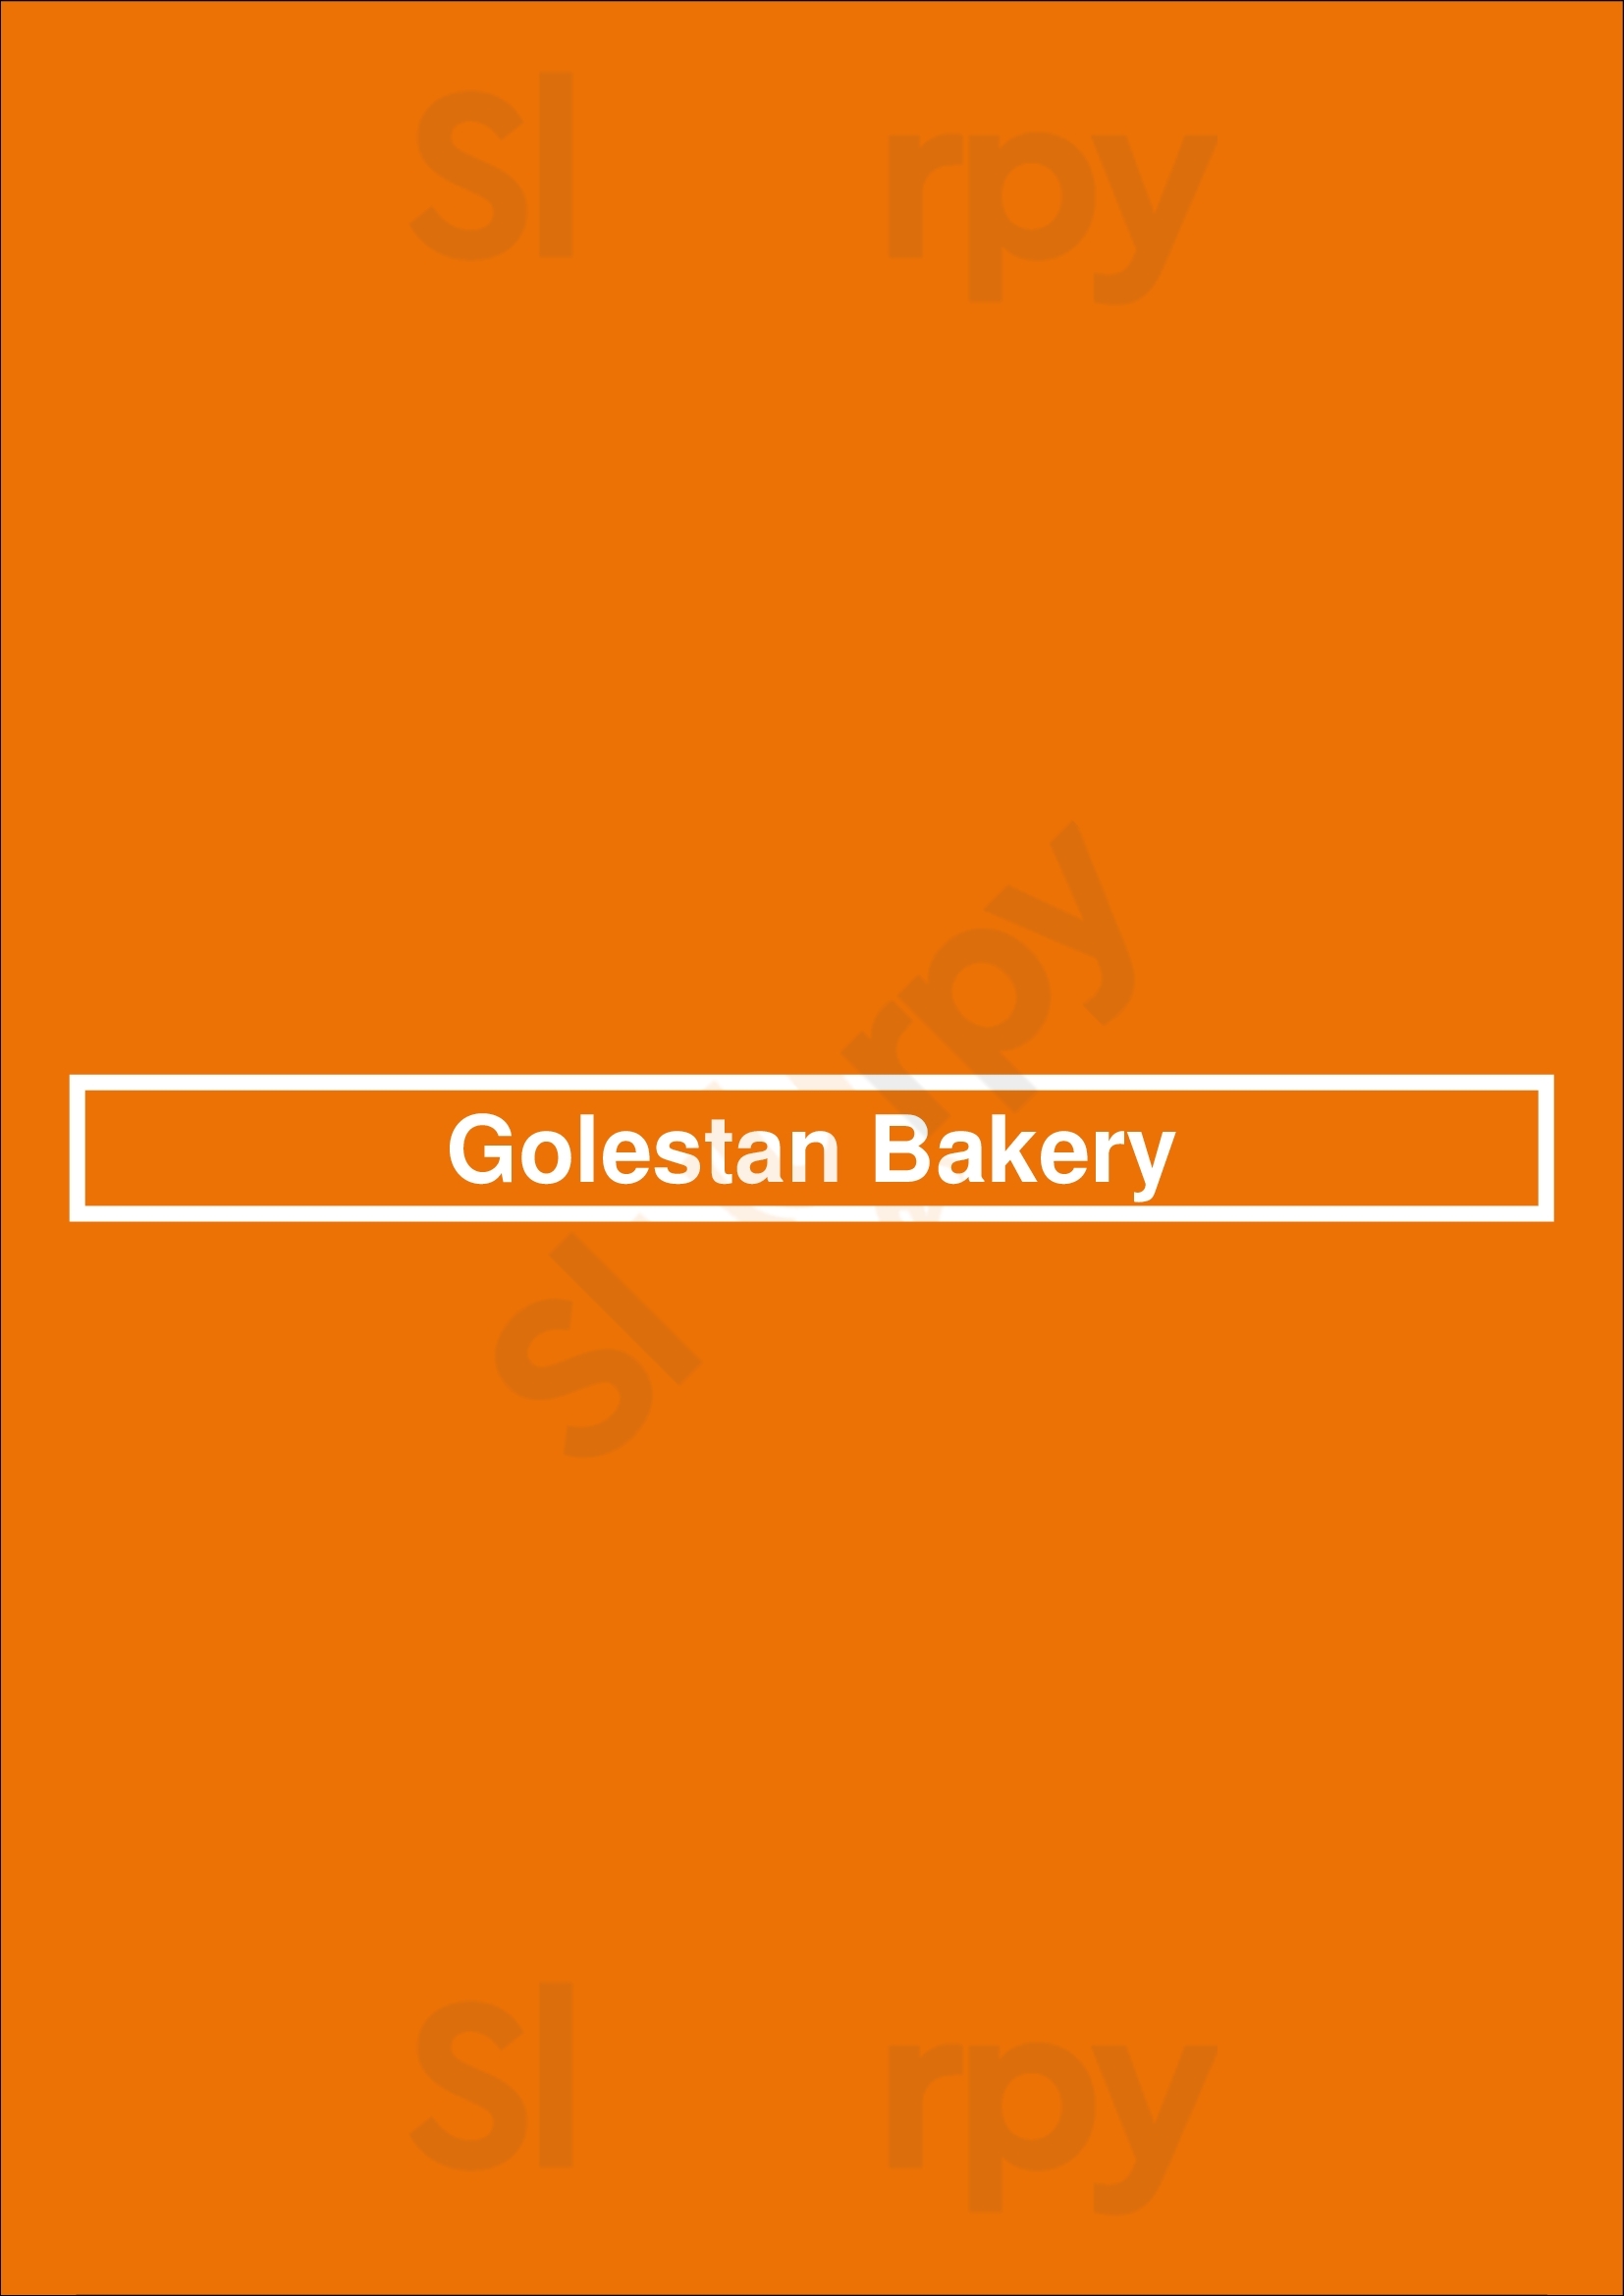 Golestan Bakery North Vancouver Menu - 1